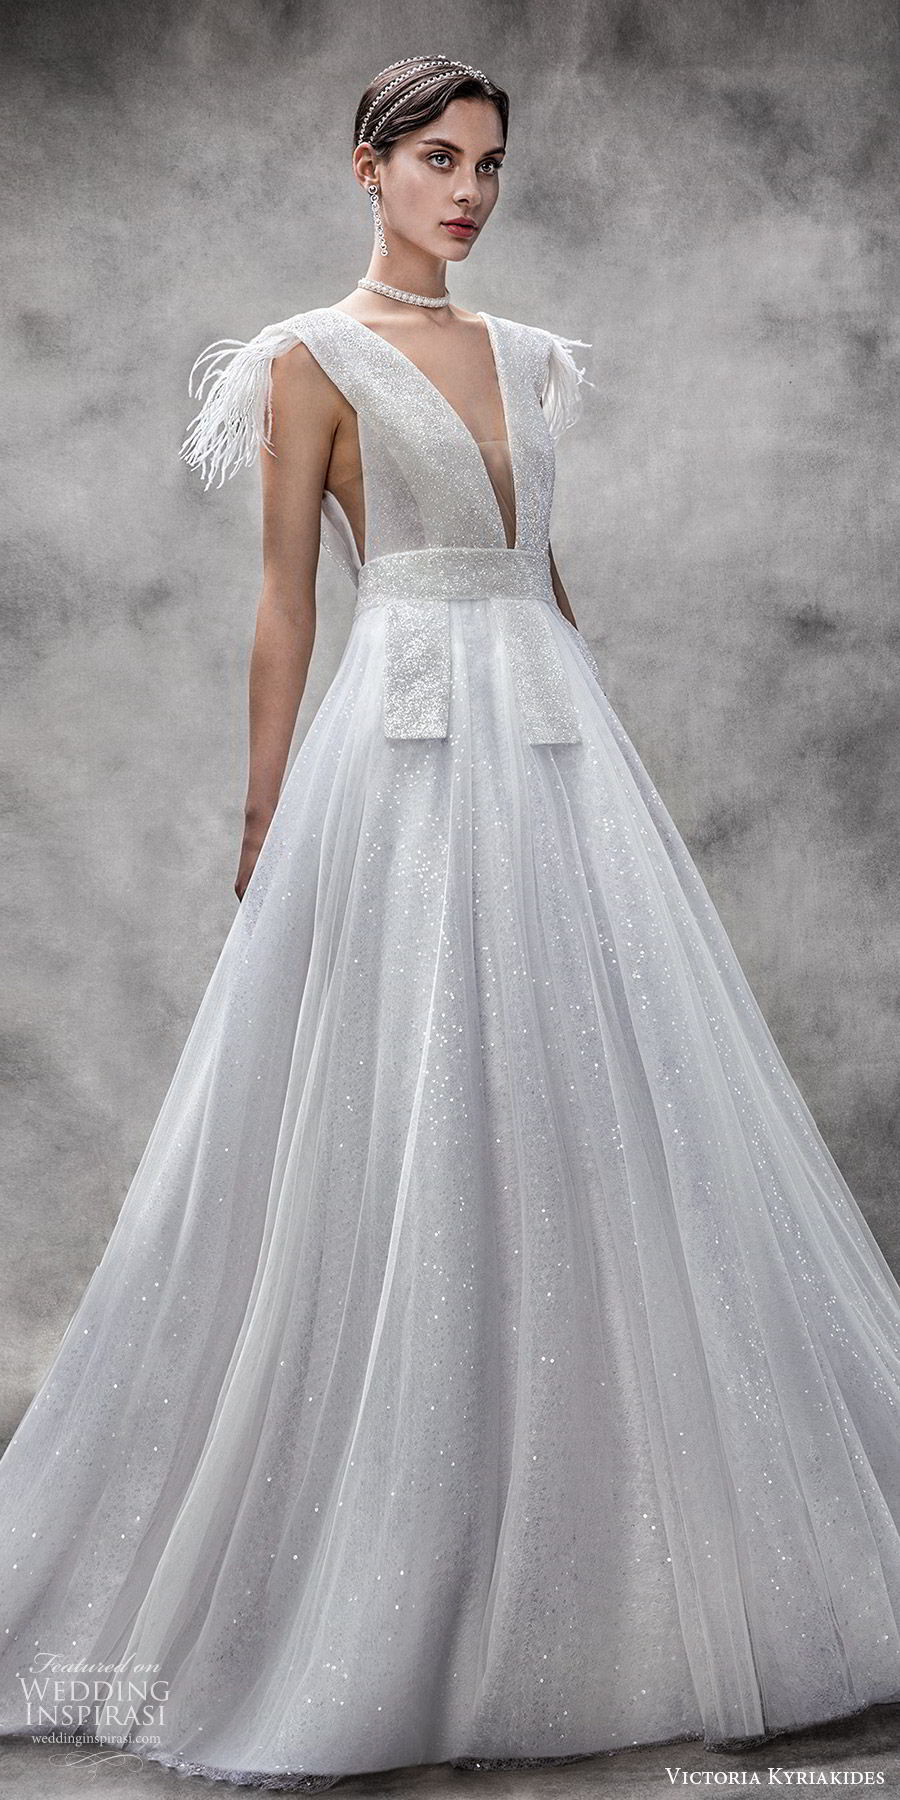 Wedding Ball Gowns 2020
 Victoria Kyriakides Spring 2020 Wedding Dresses